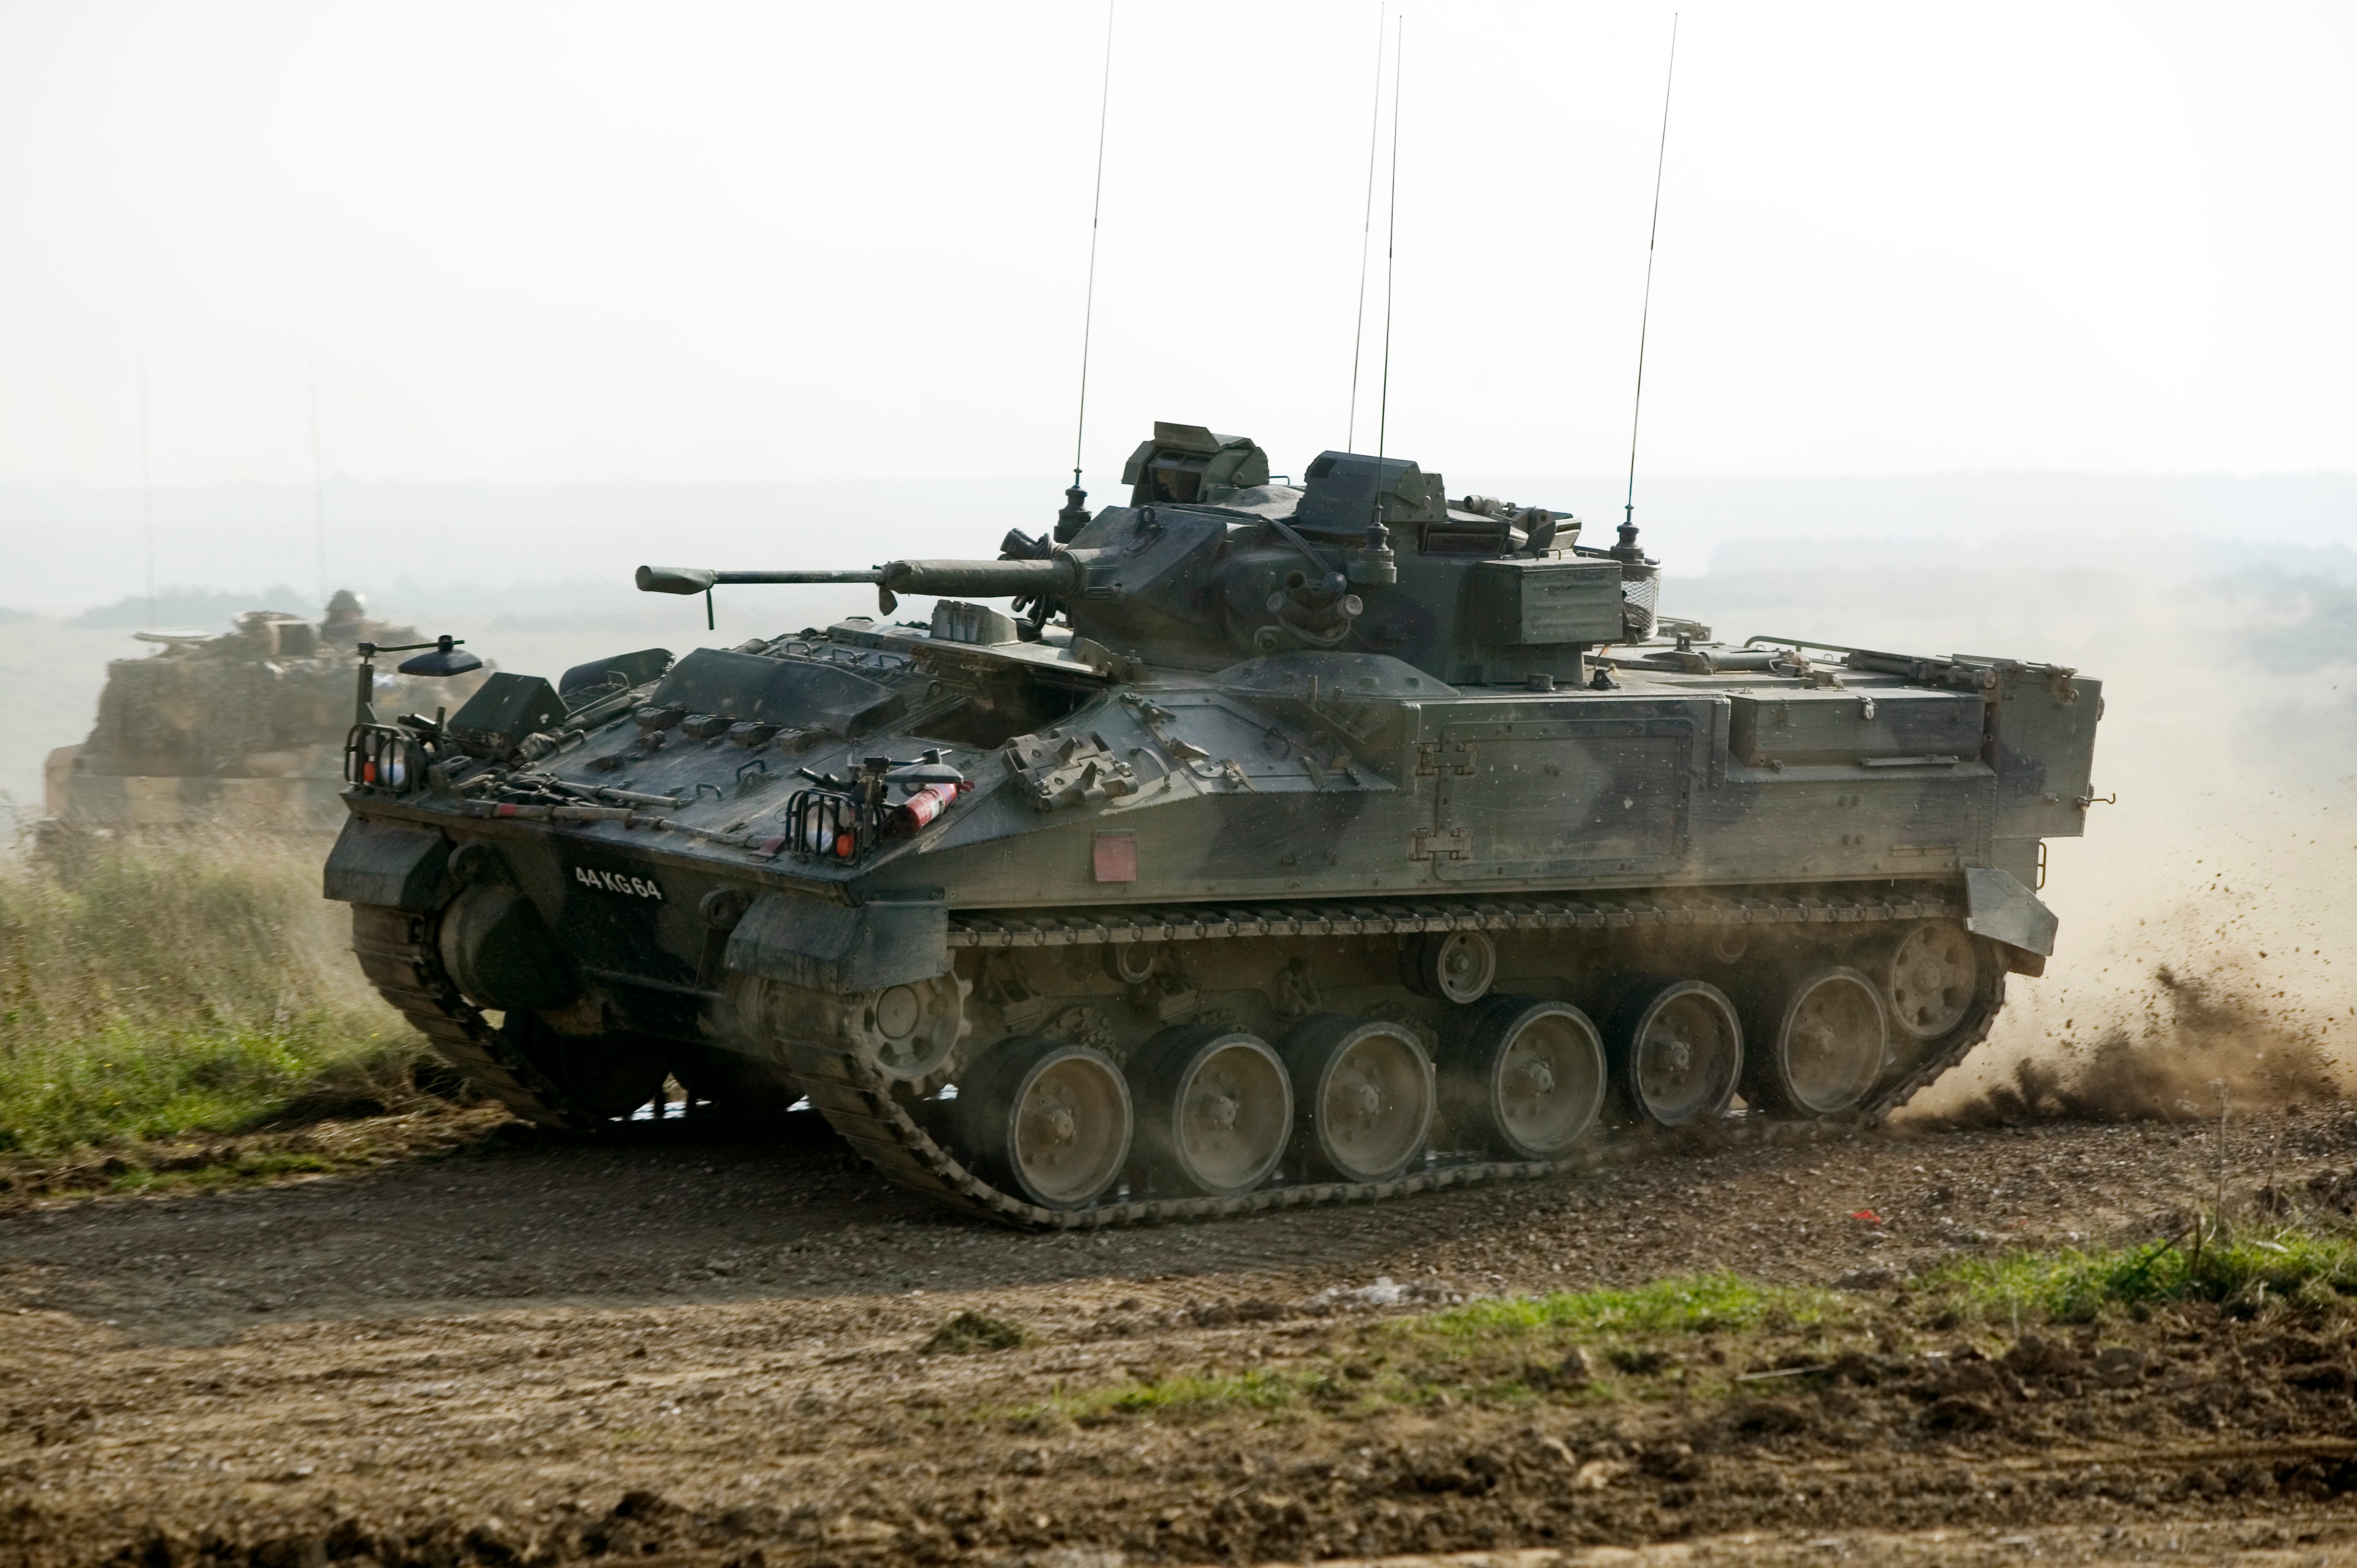 Warrior tracked armoured vehicle - Wikipedia